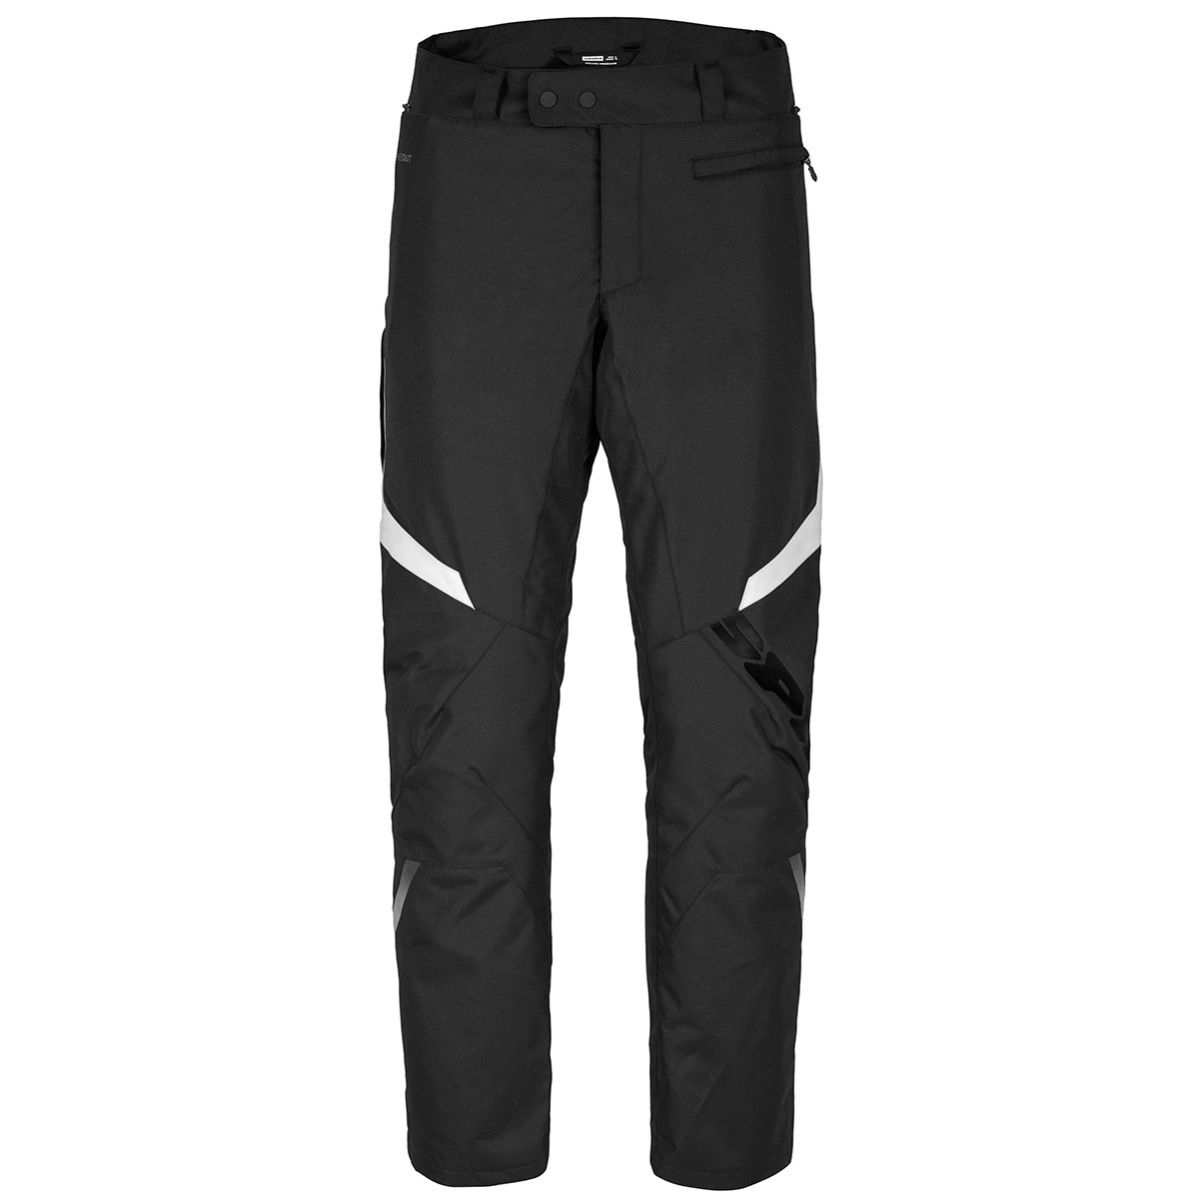 Image of Spidi Sportmaster Pants Black White Size 4XL ID 8030161478174